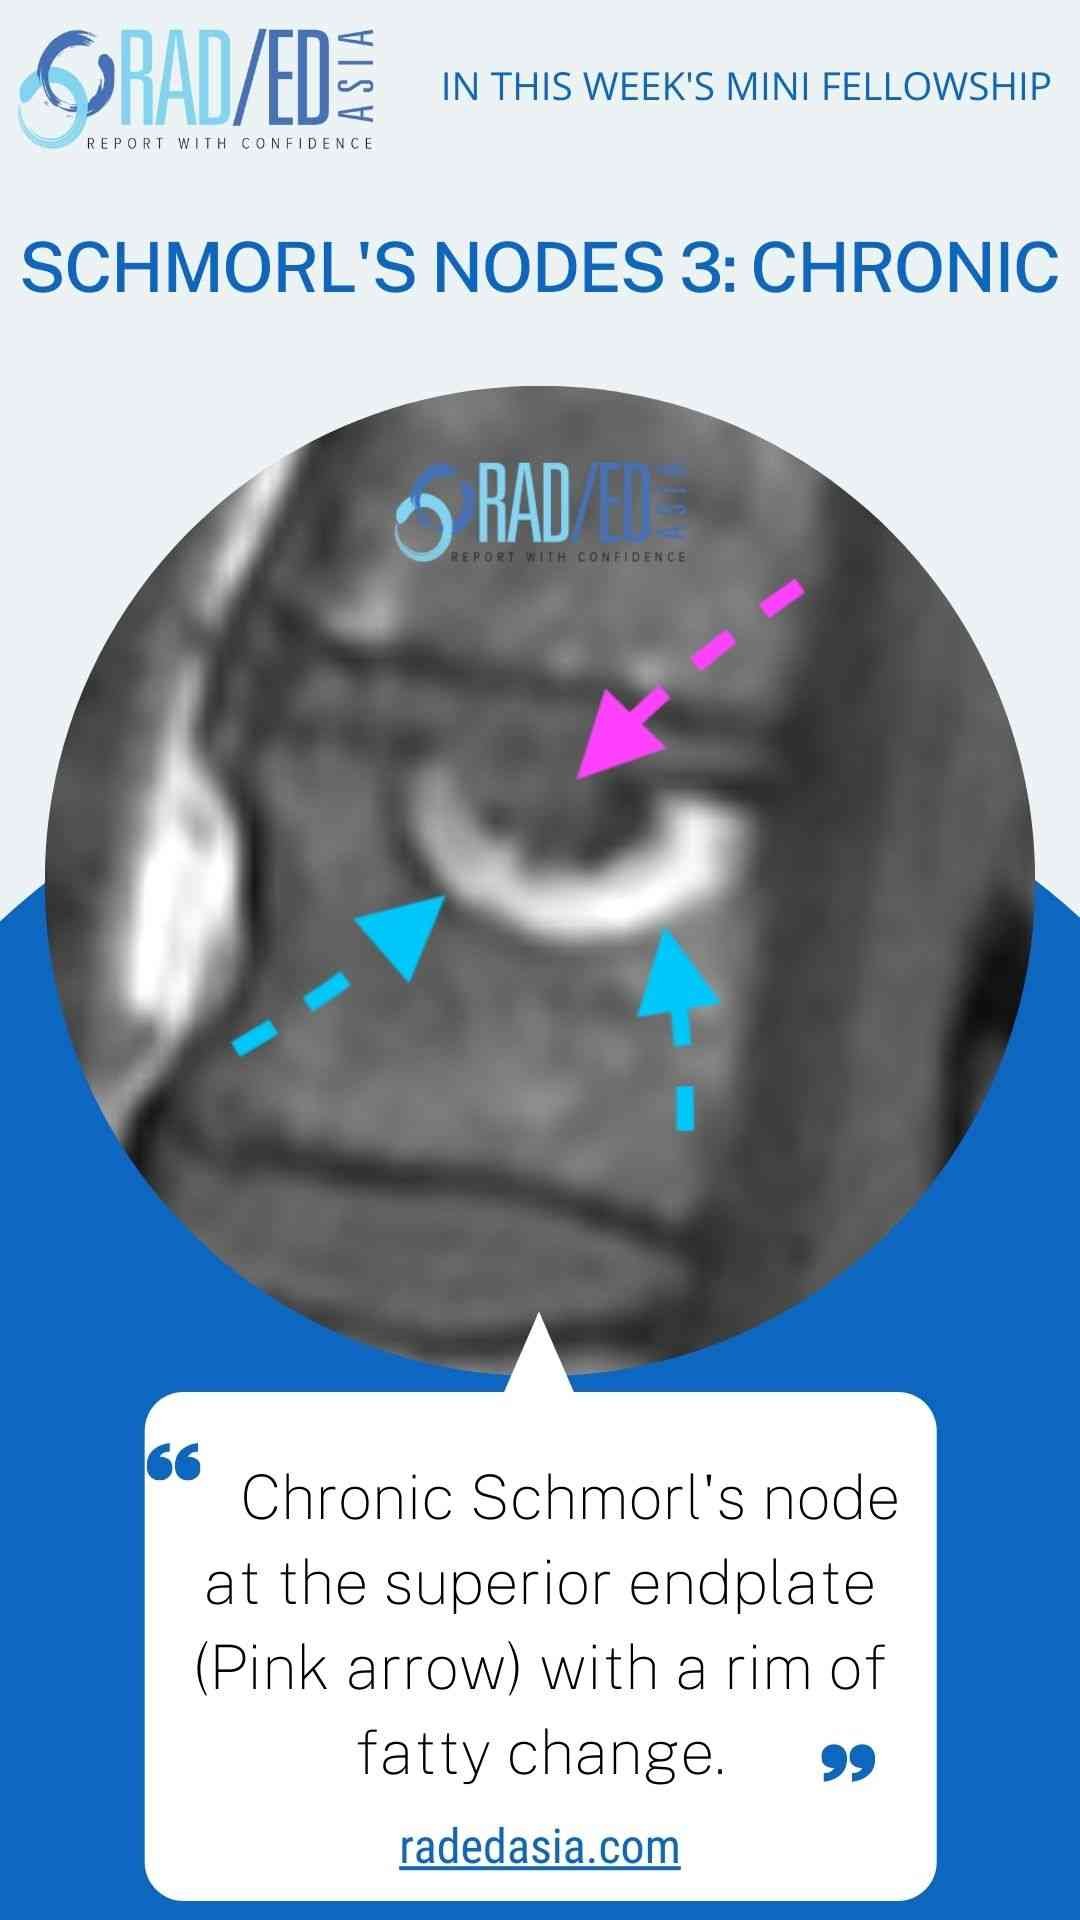 schmorl's node chronic spine mri radedasia